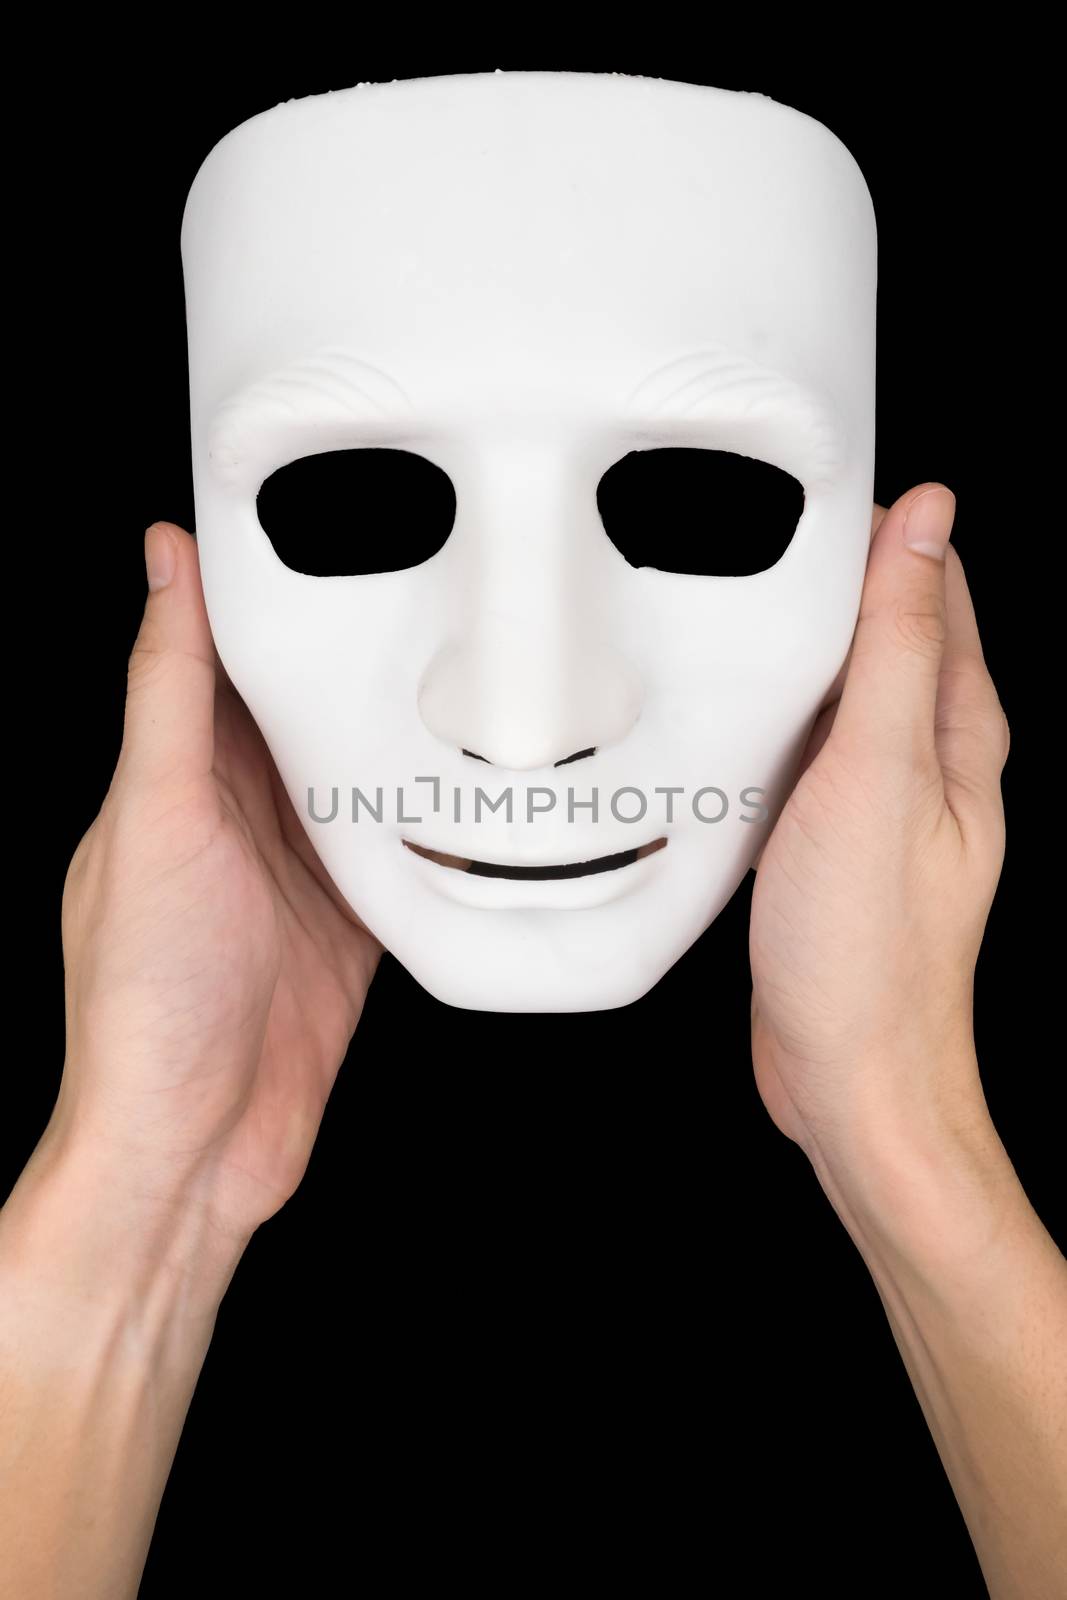 Hands holding white mask on black background.